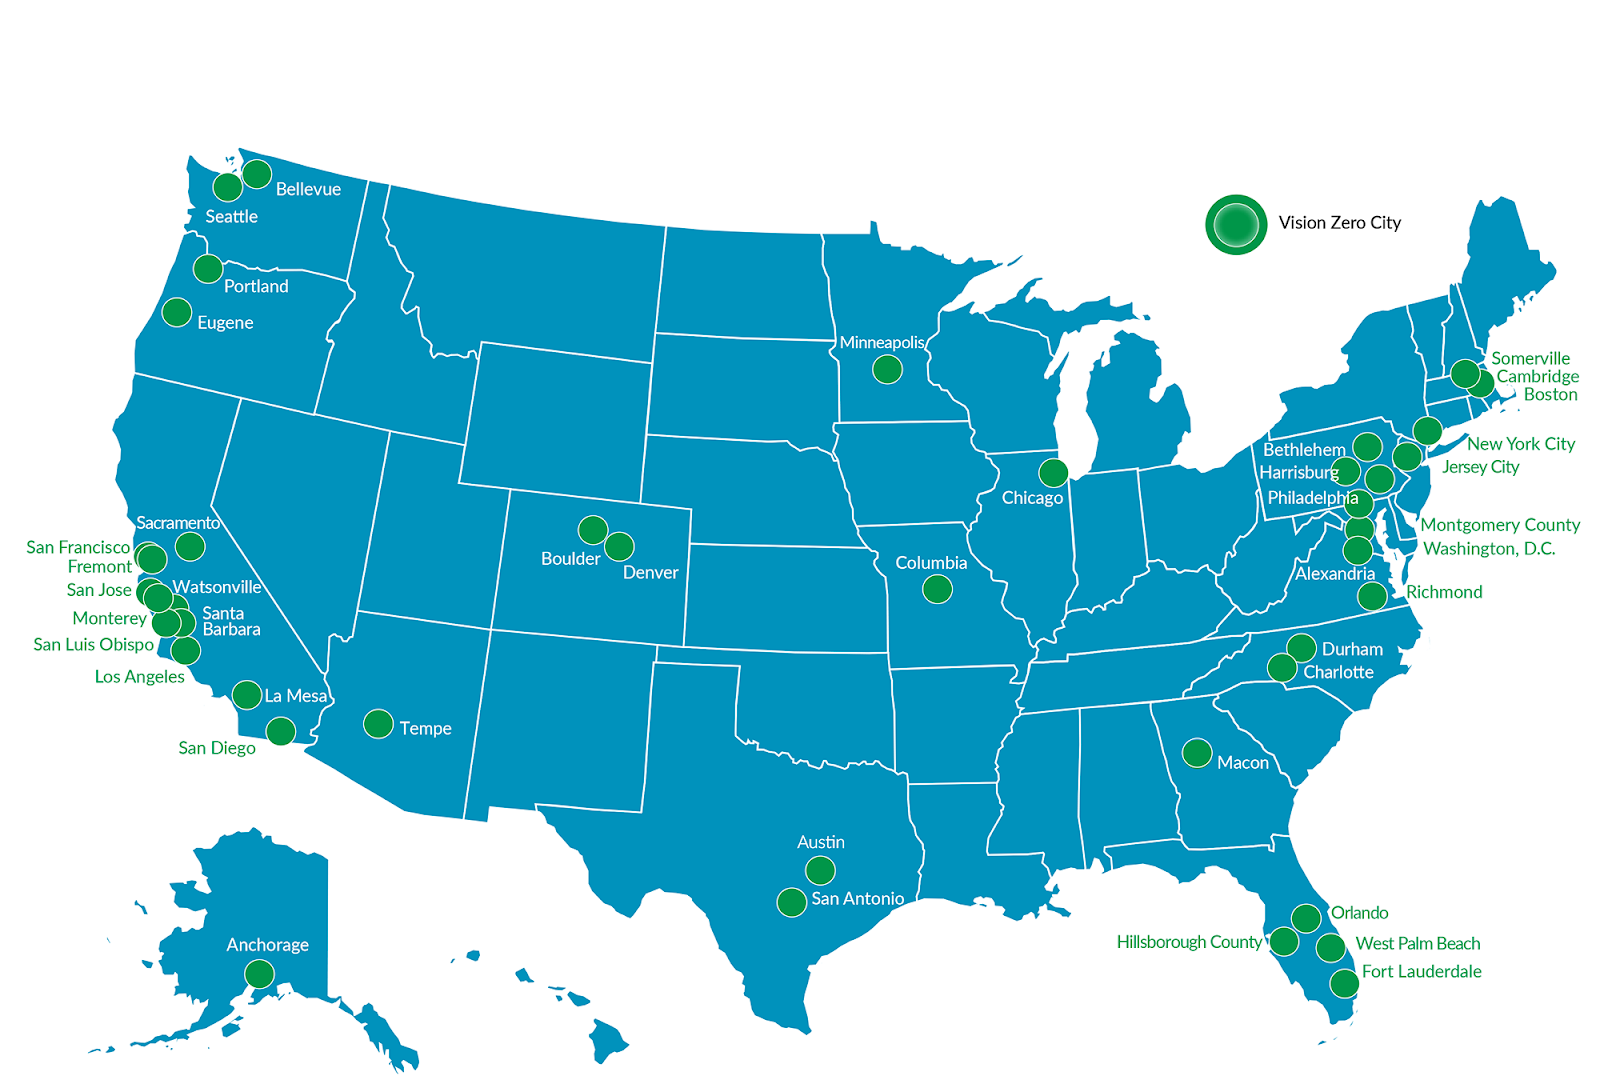 Vision Zero cities include Somerville, Boston, Philadelphia, New York City, Charlotte, Austin, Denver, LA, Portland, and more